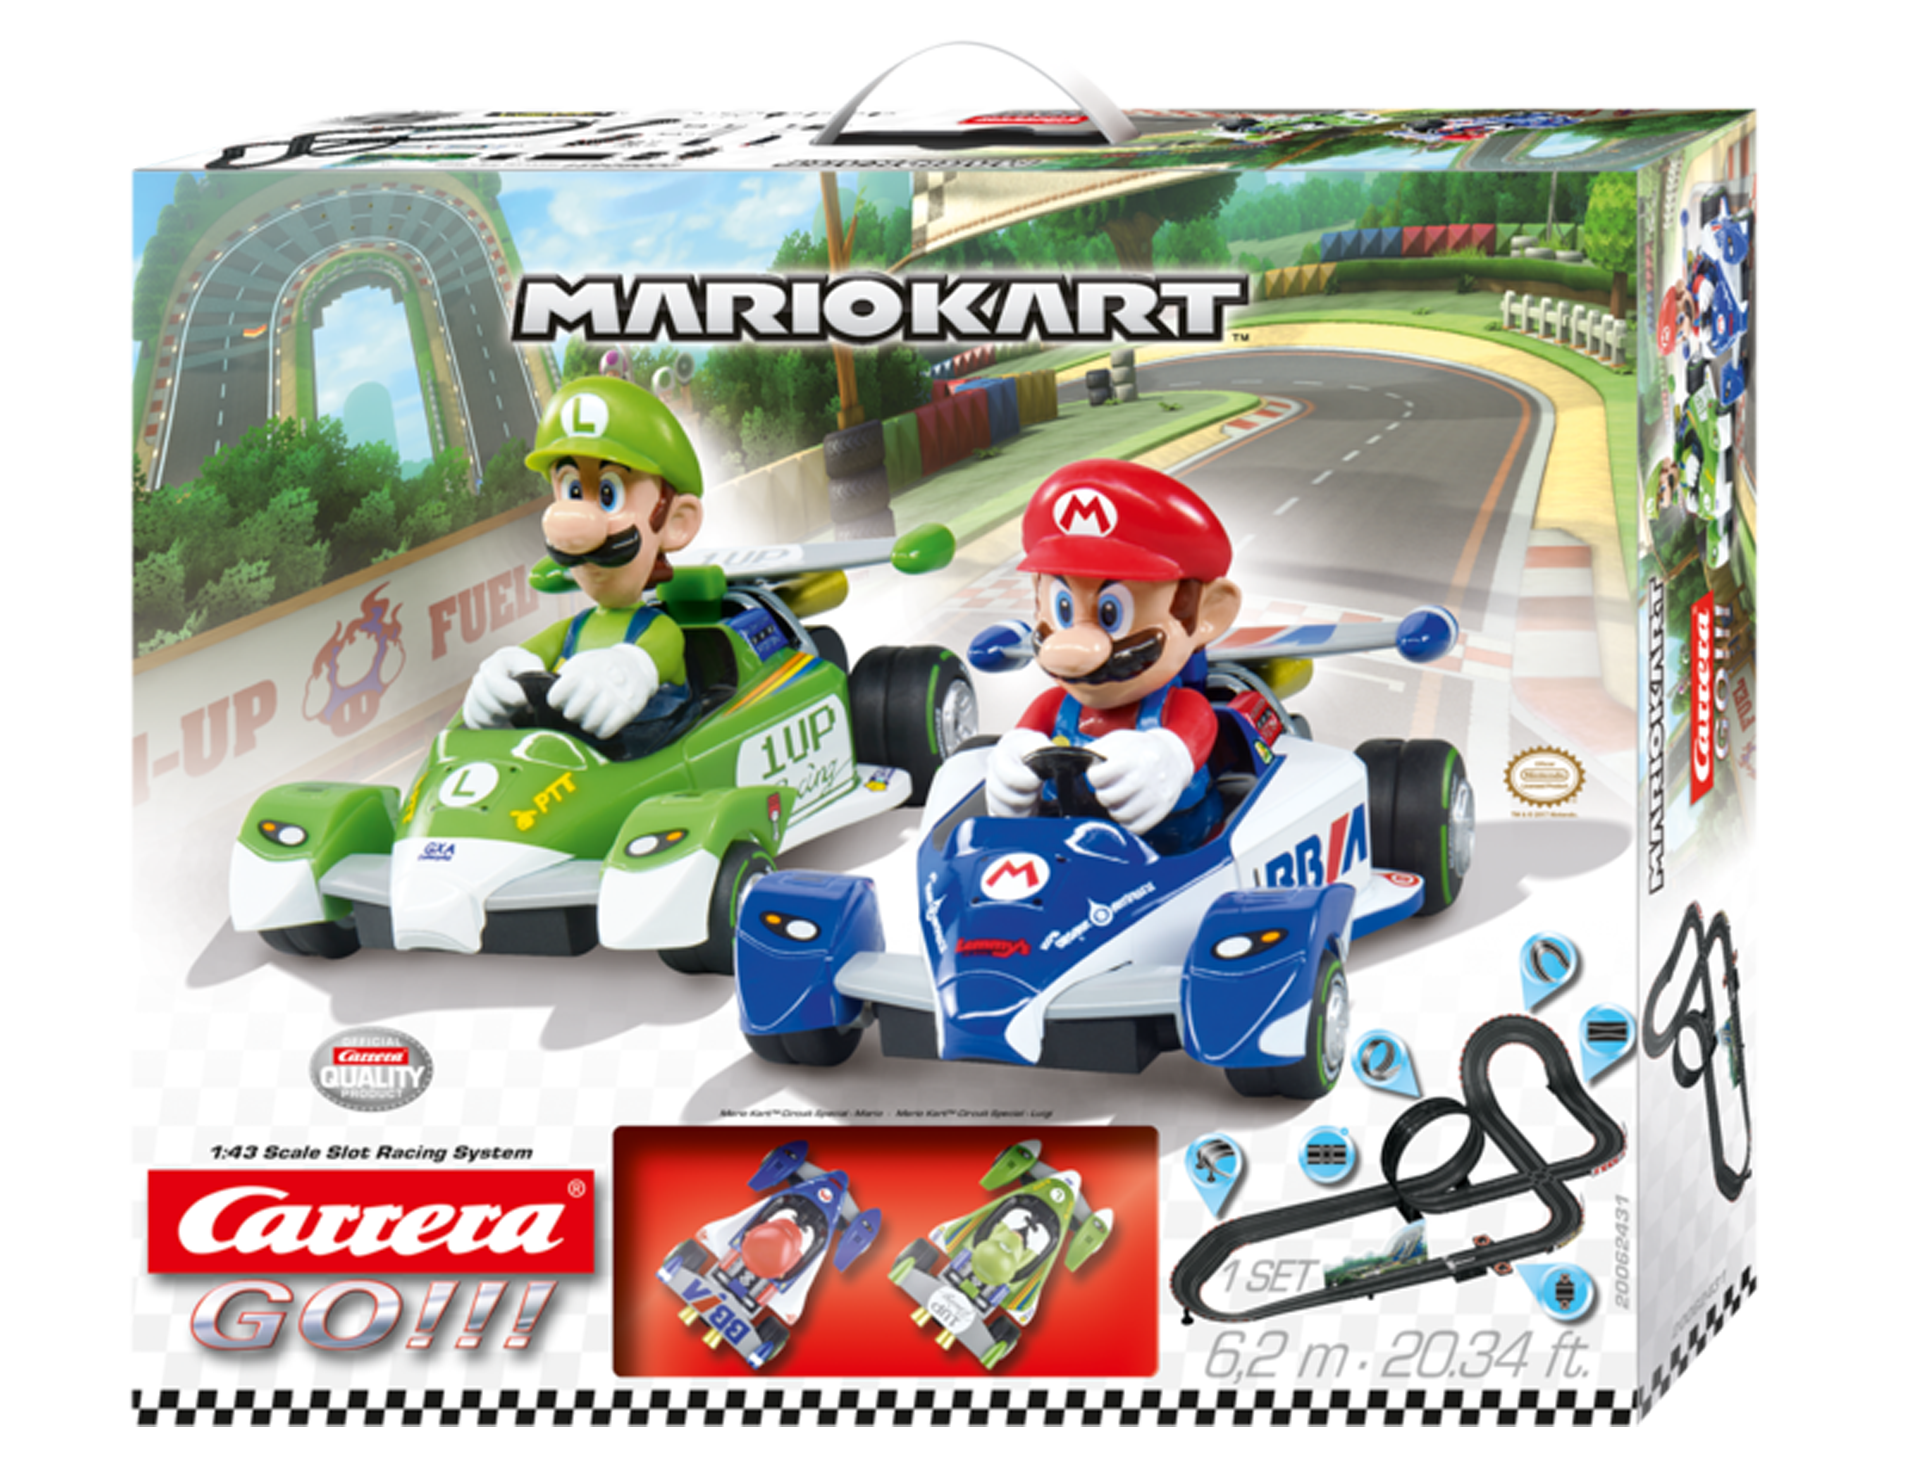 Carrera GO! Mario Kart Circuit électrique 